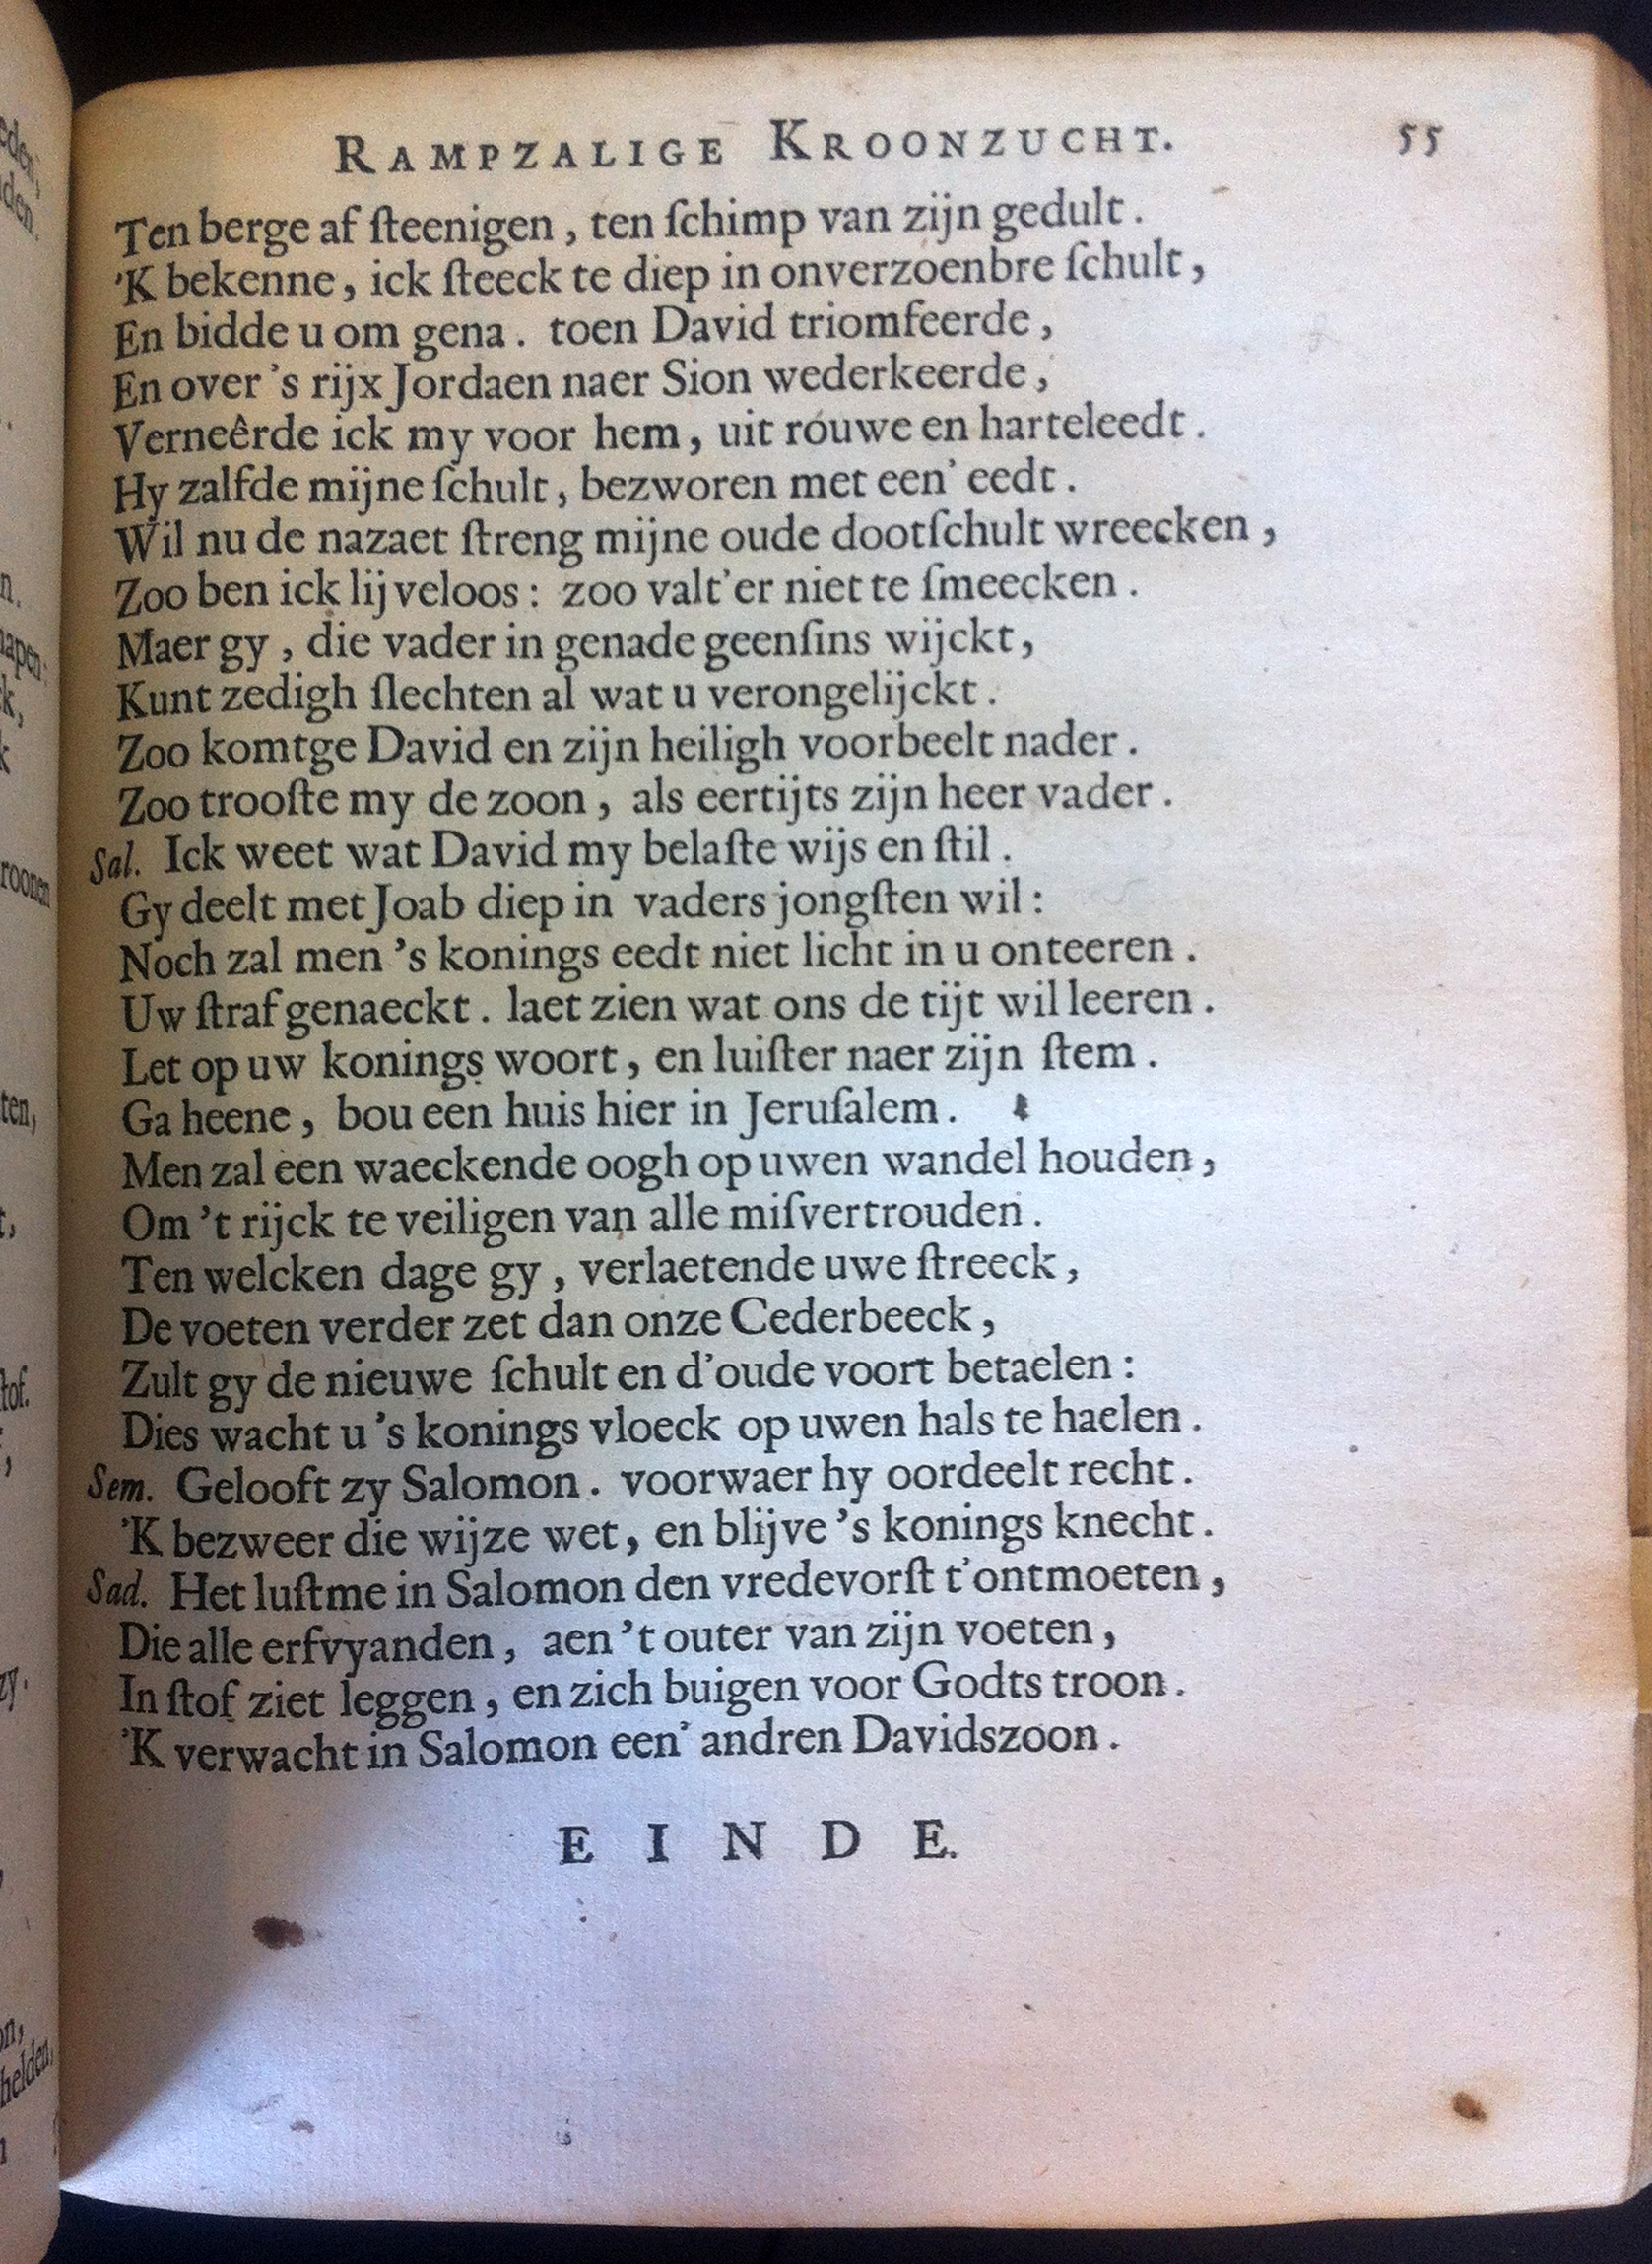 Ceneton Vondel Adonias 1661.jpg